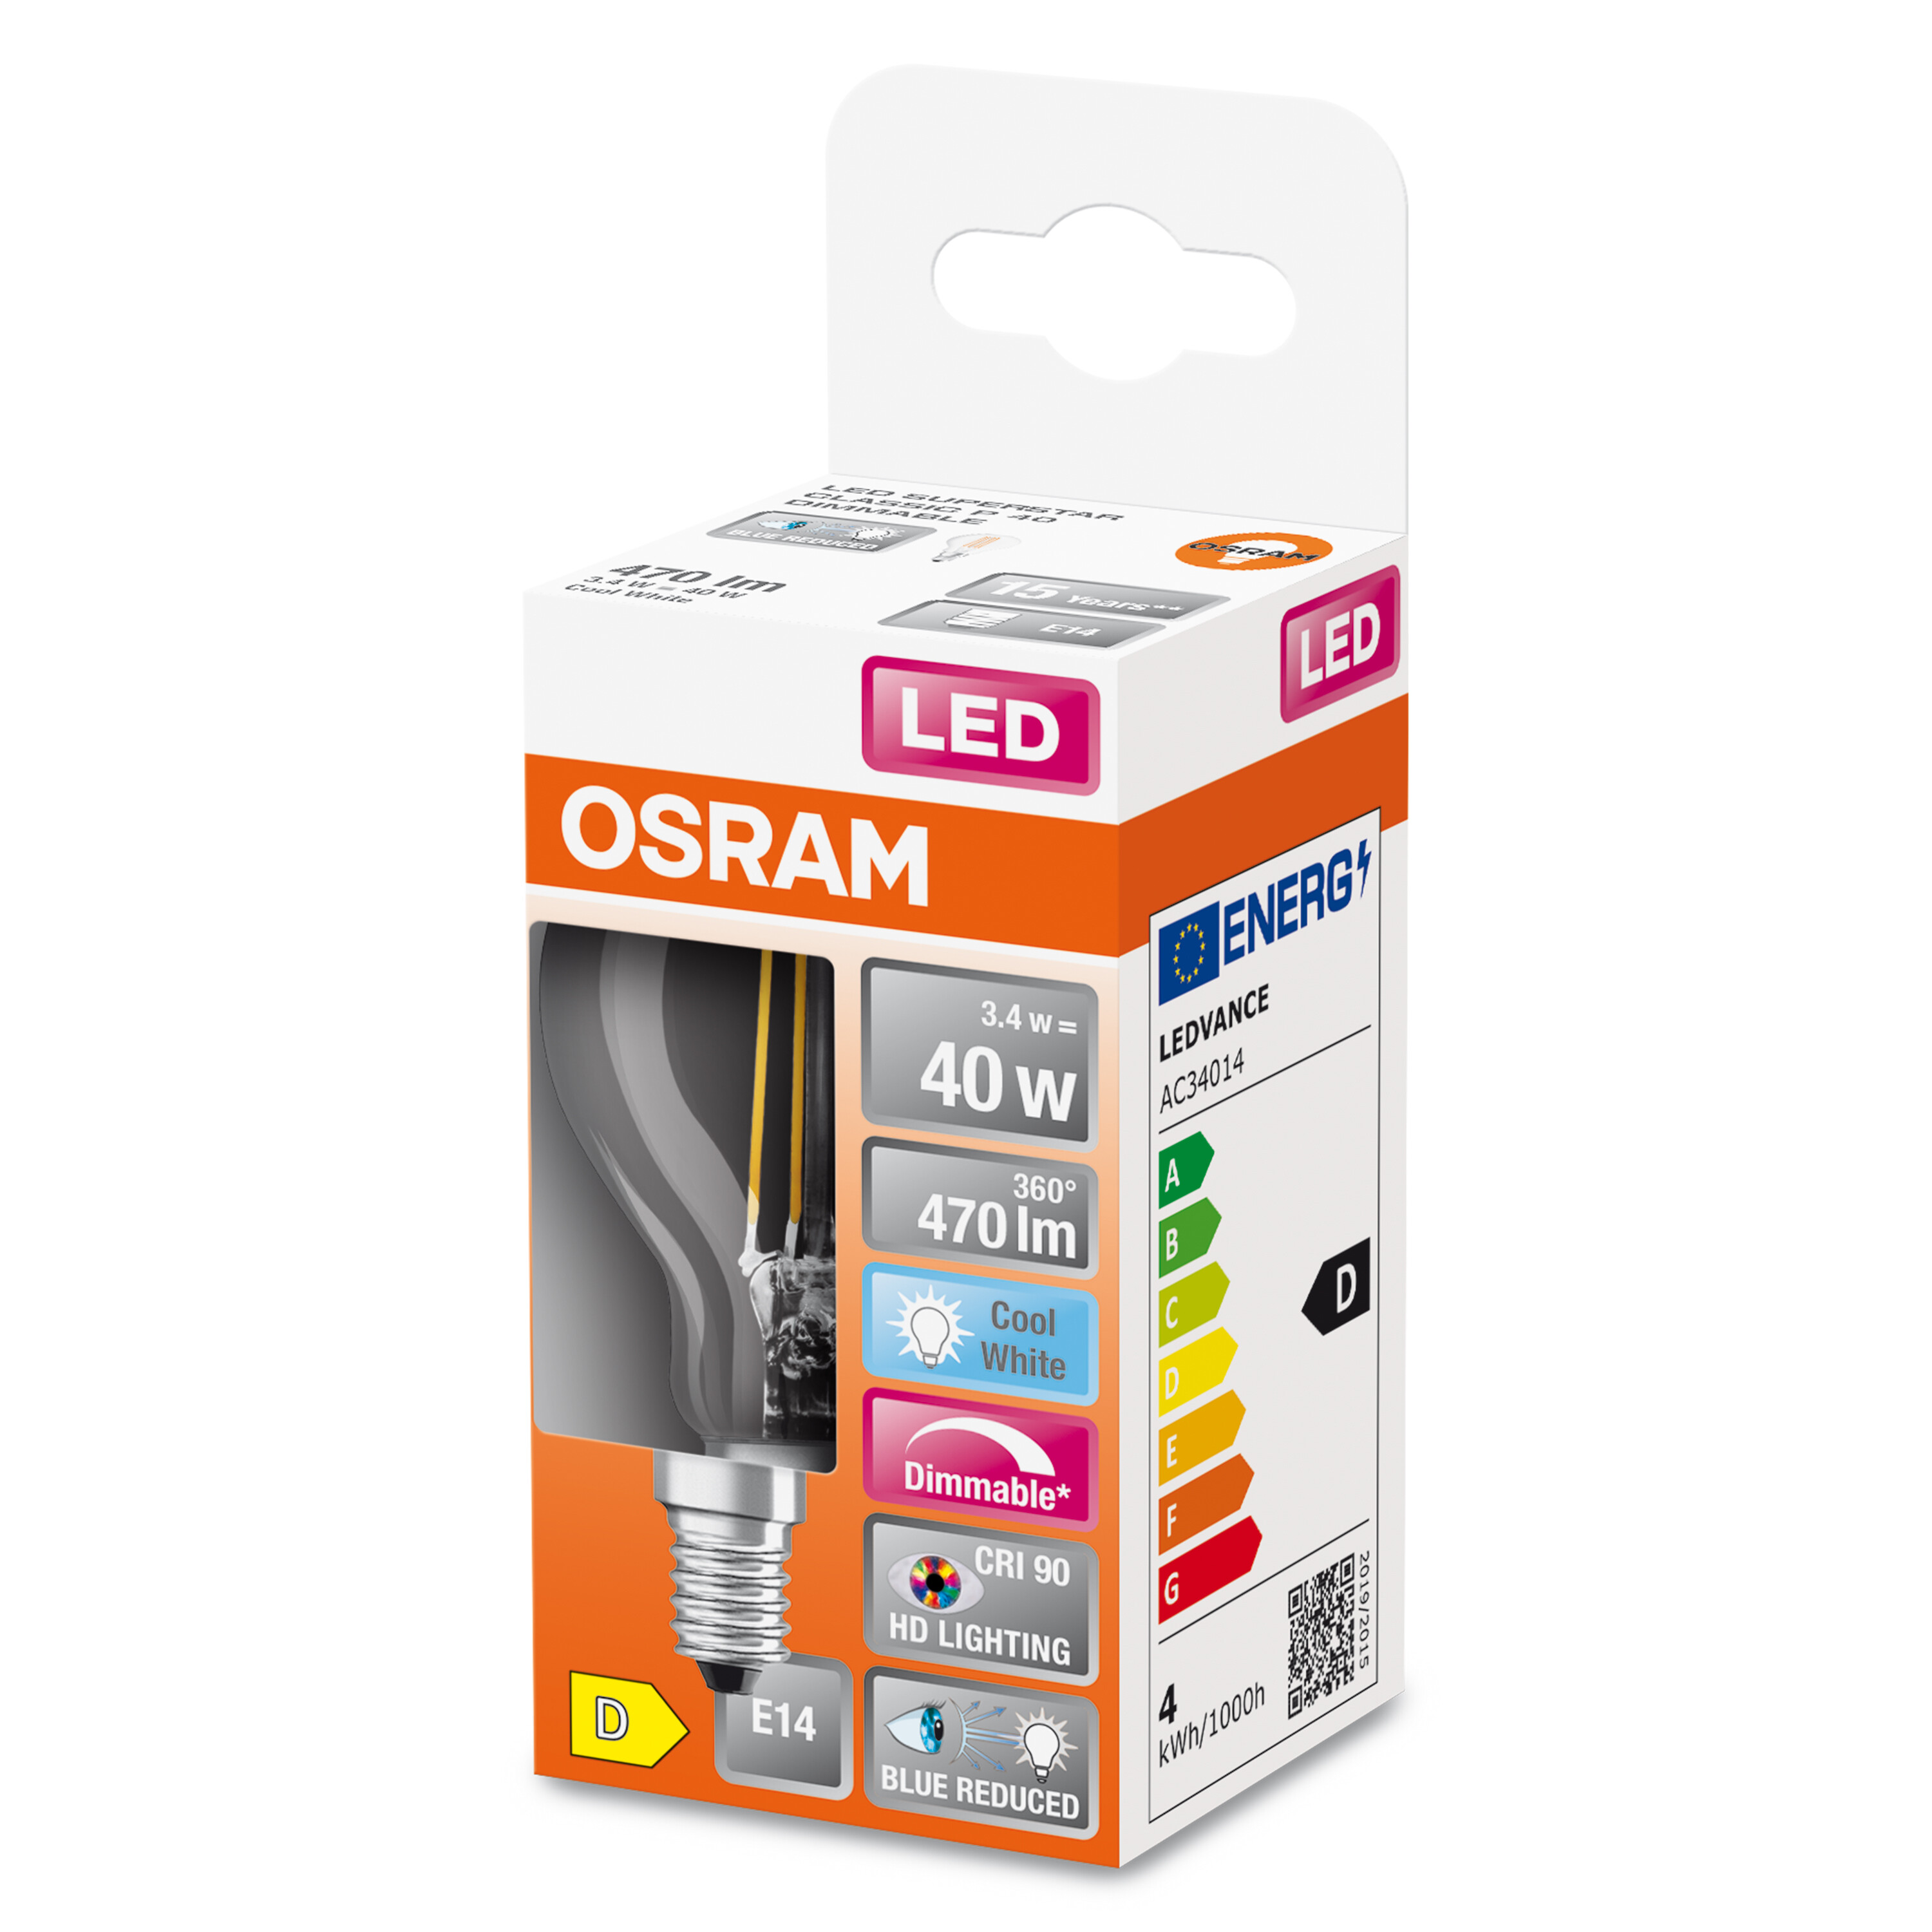 OSRAM  LED Kaltweiß P 470 PLUS SUPERSTAR CLASSIC LED Lampe FILAMENT Lumen